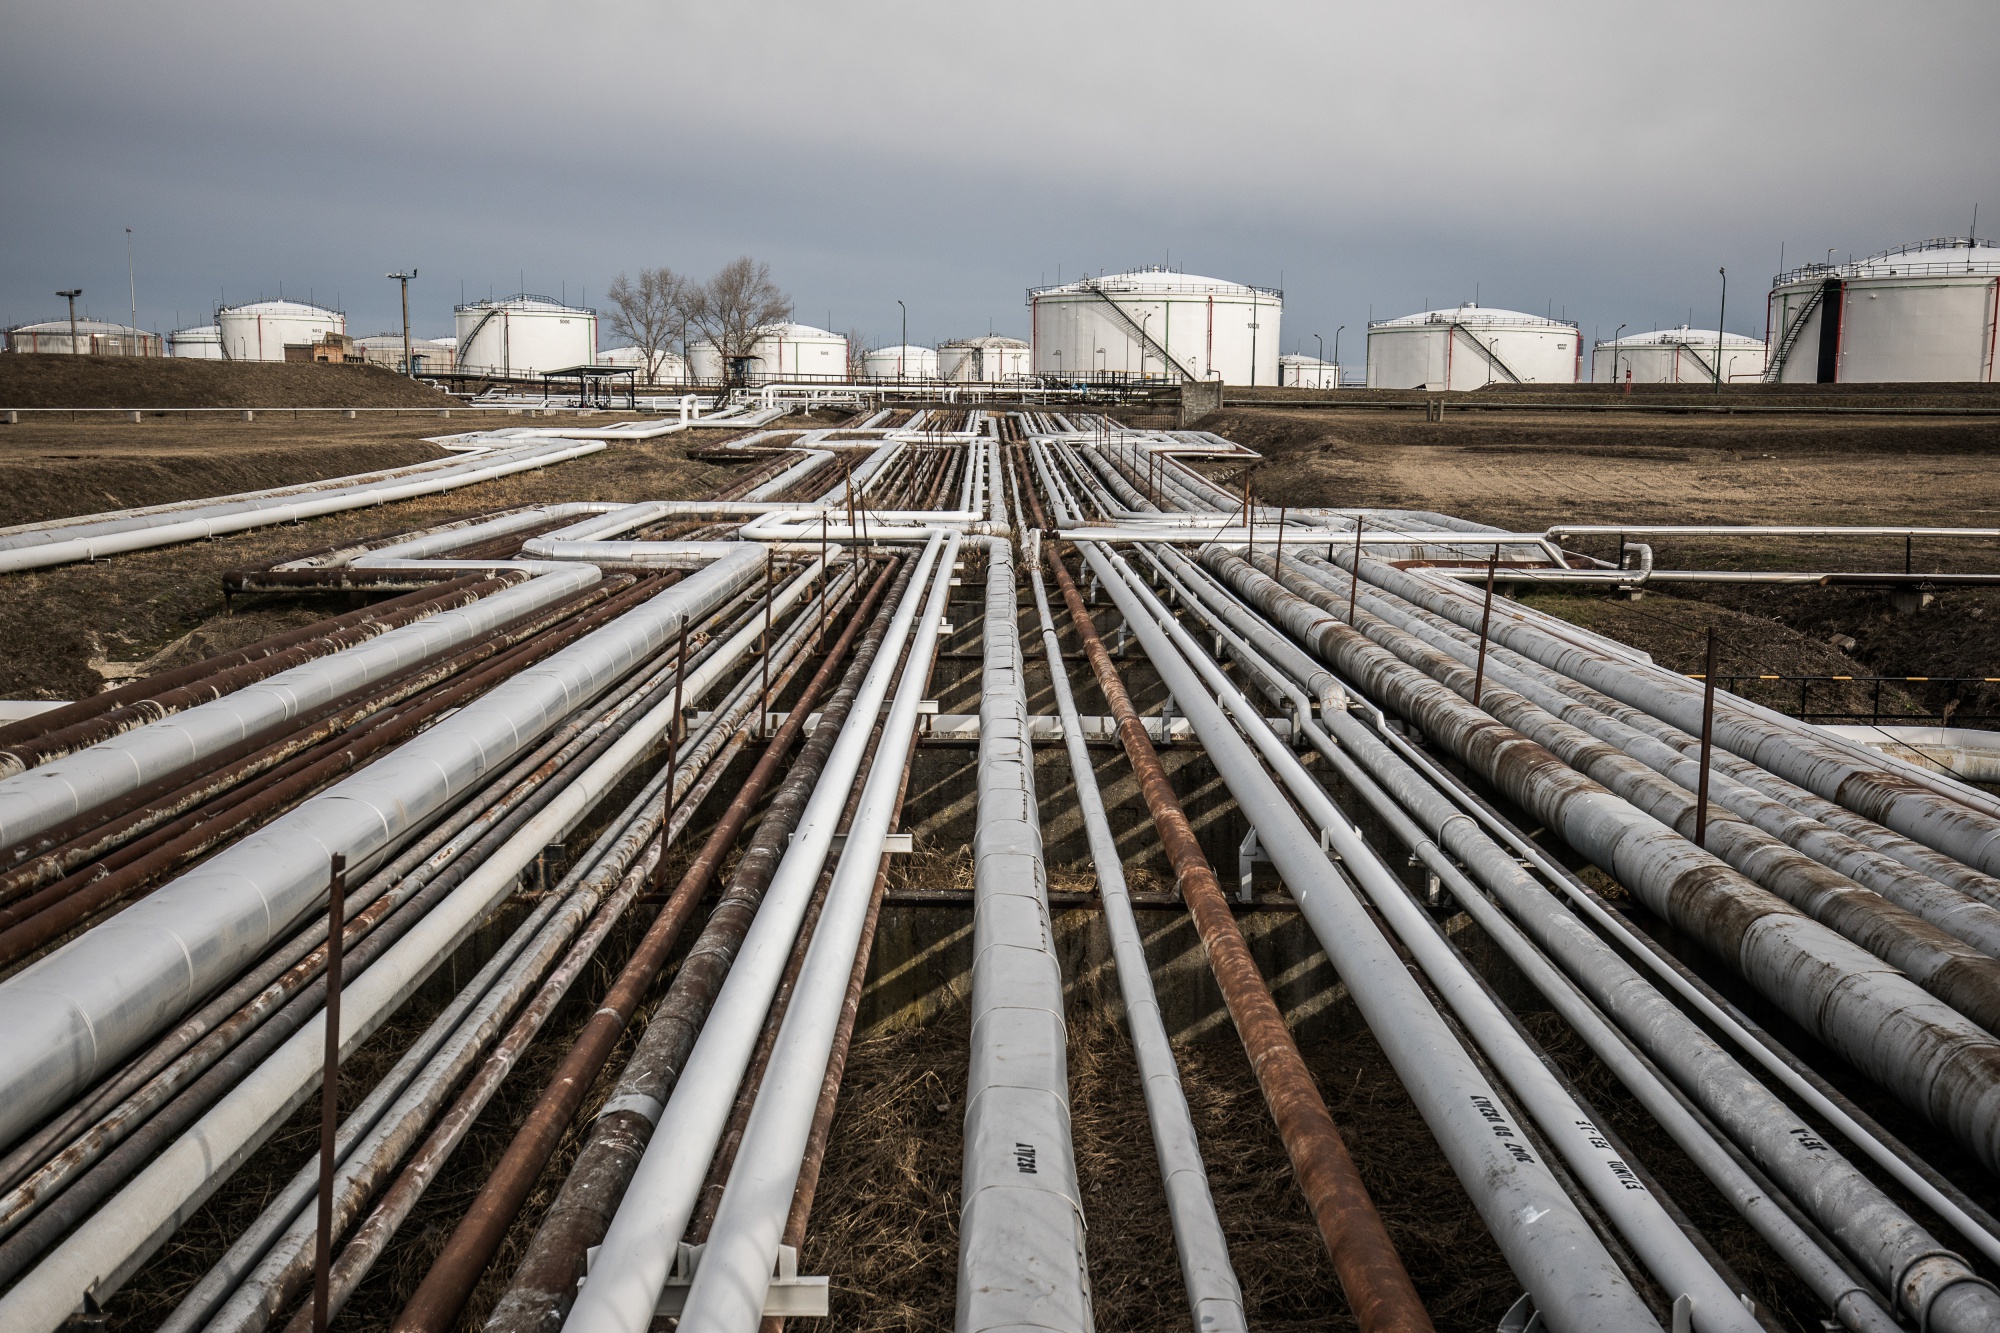 MOL Hungarian Oil & Gas Plc Refinery As Oil Trades Near Three-Month High